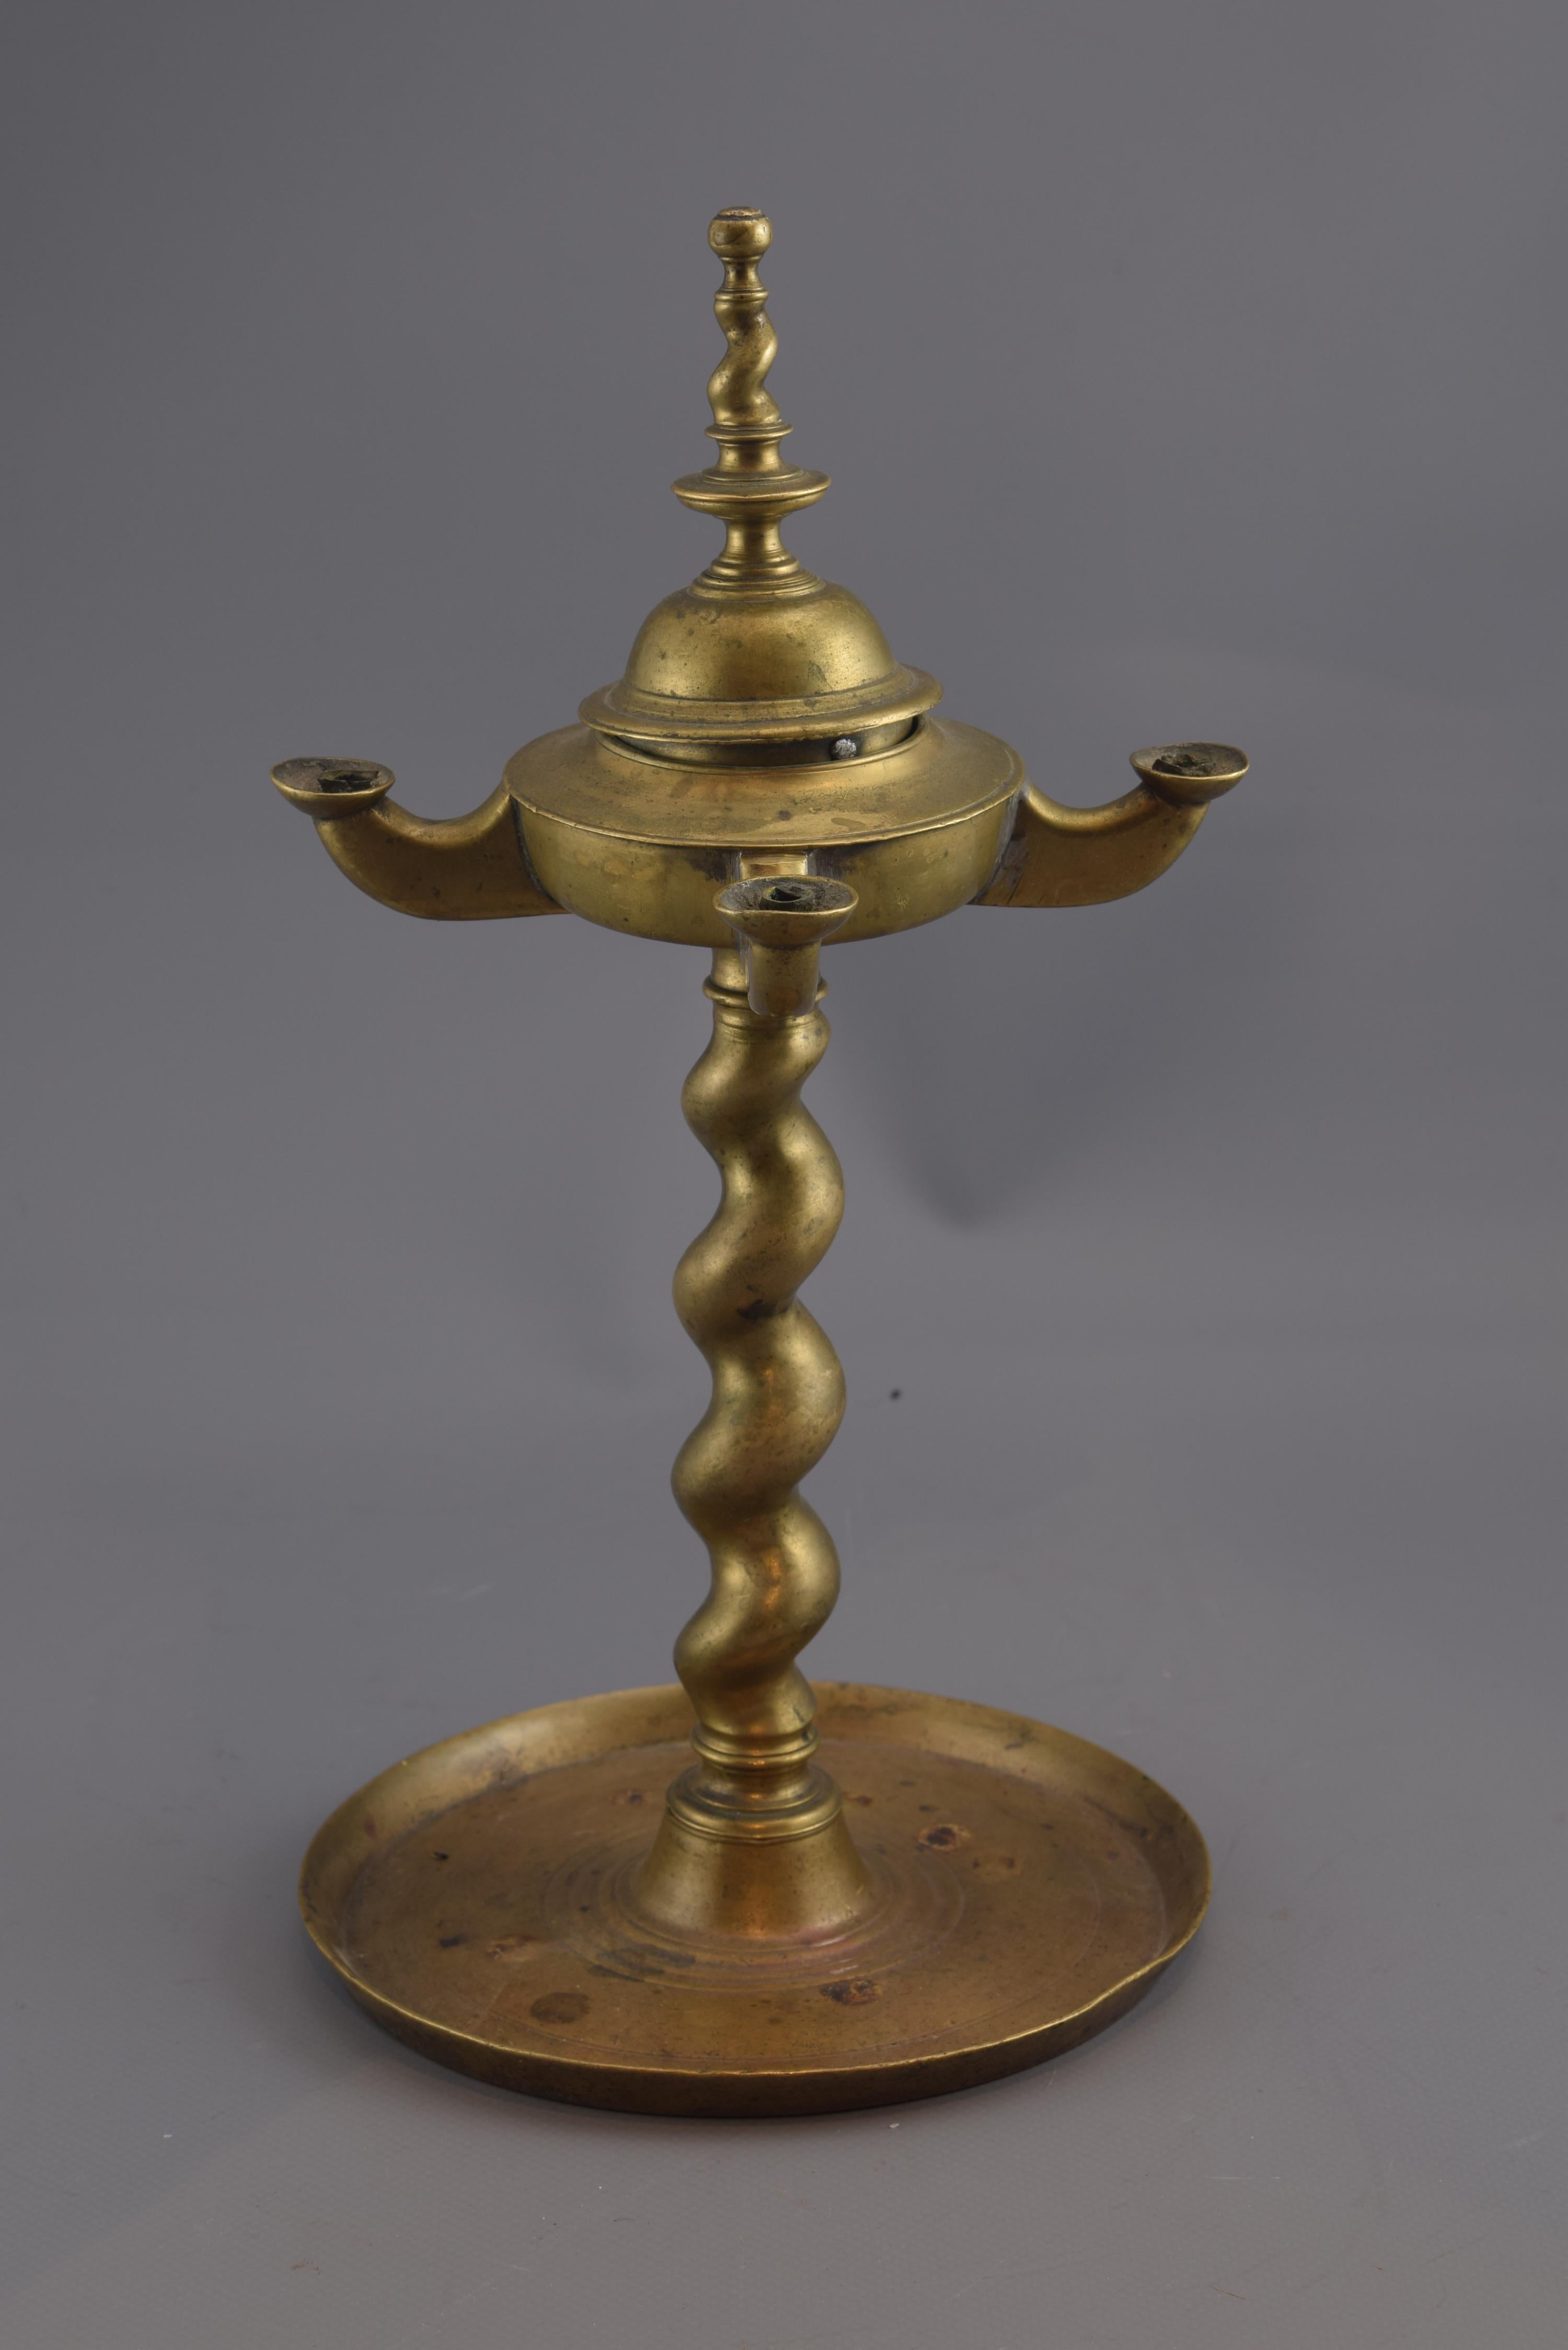 17th century lamp